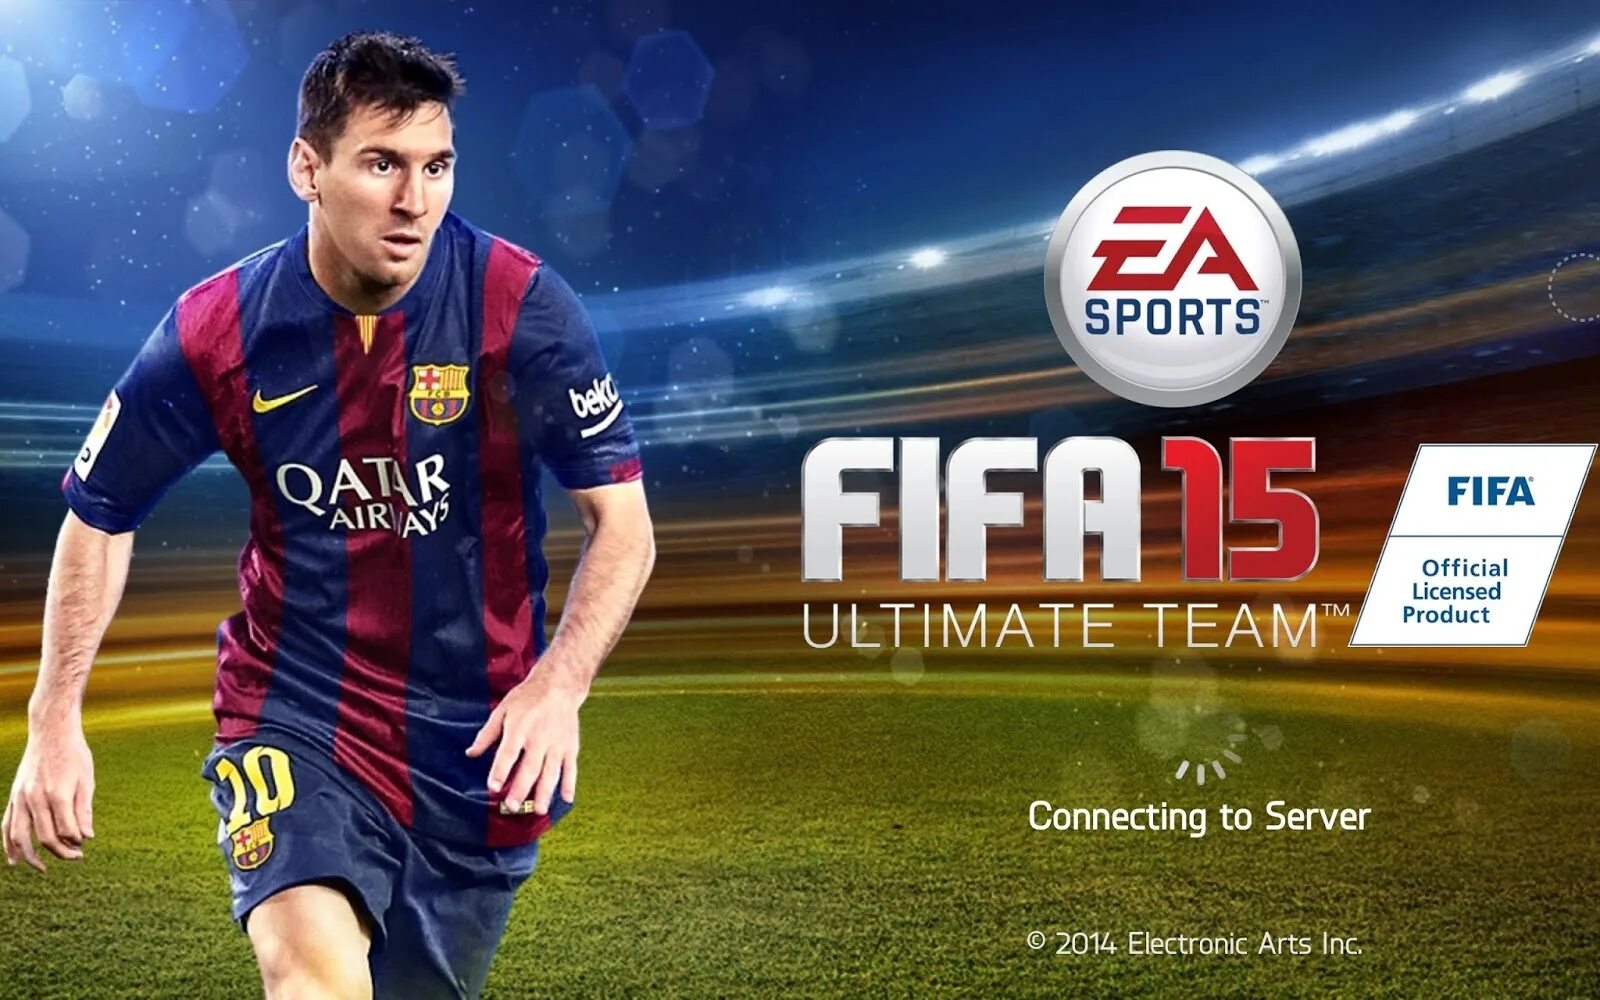 ФИФА. FIFA 15. FIFA 15: Ultimate Team Edition. ФИФА 15 трансферы. 15 апреля 2016